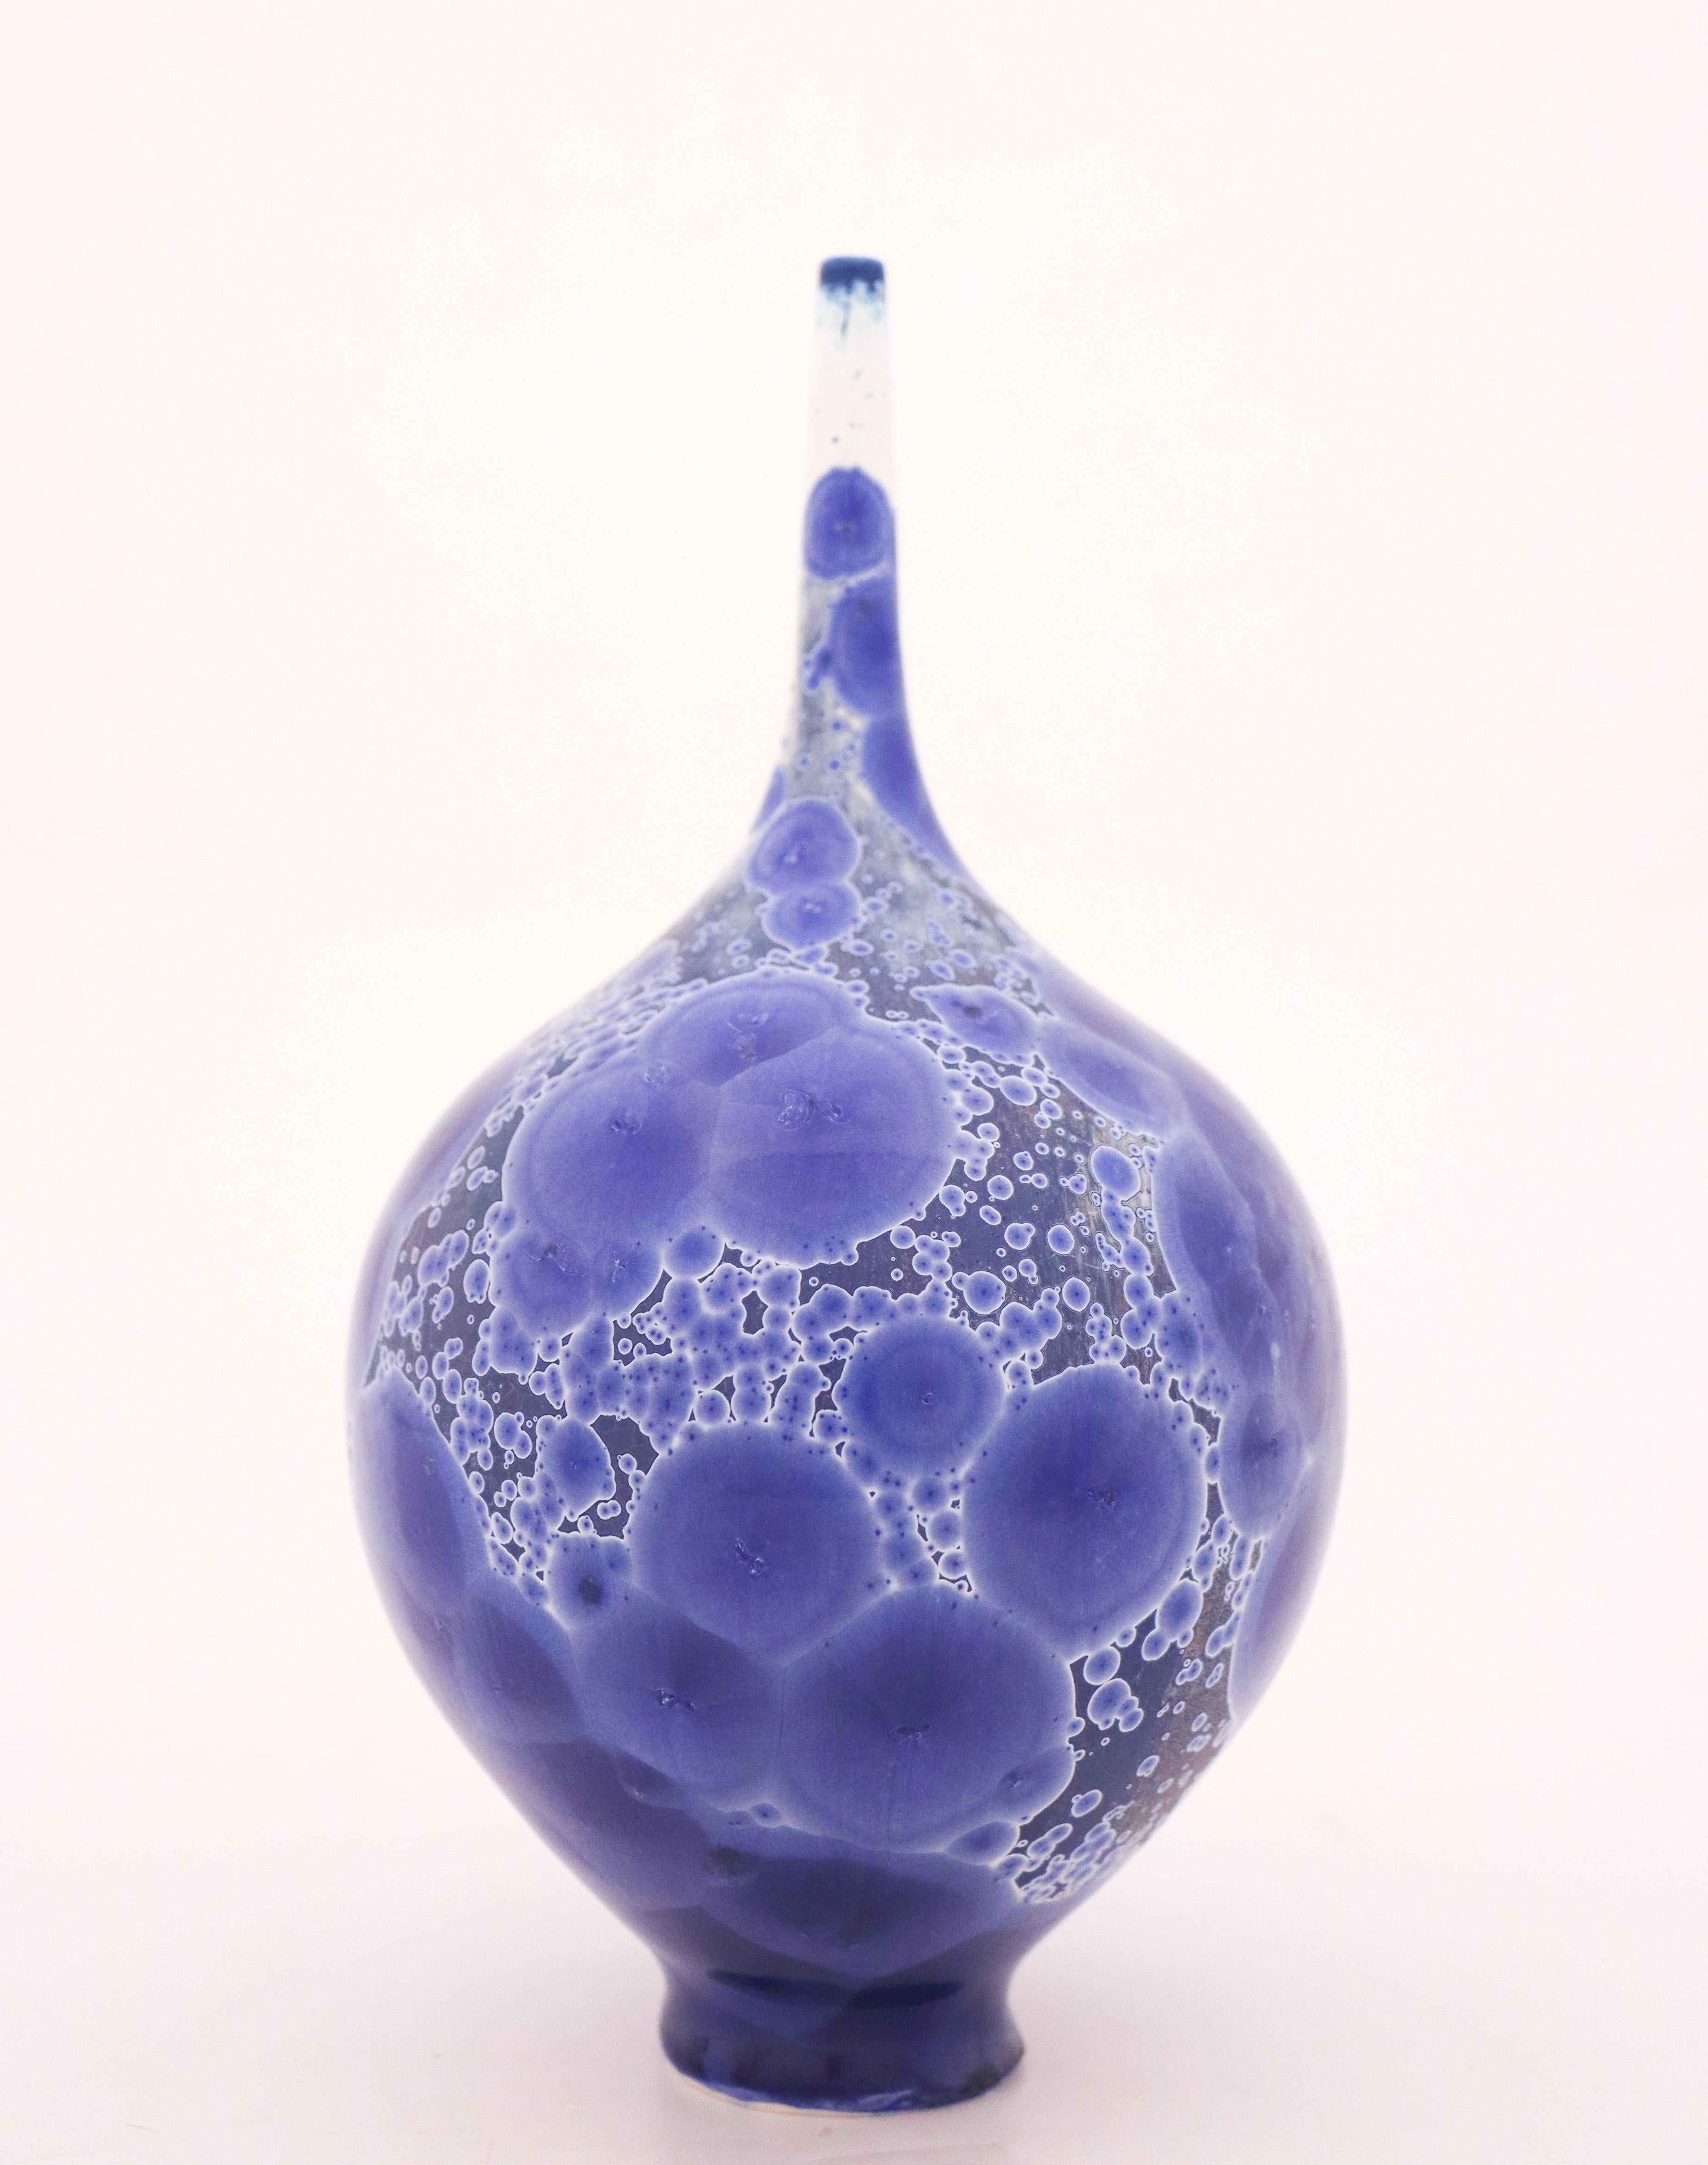 Glazed Vase by Isak Isaksson, Blue & White Glaze, Contemporary Swedish Ceramicist